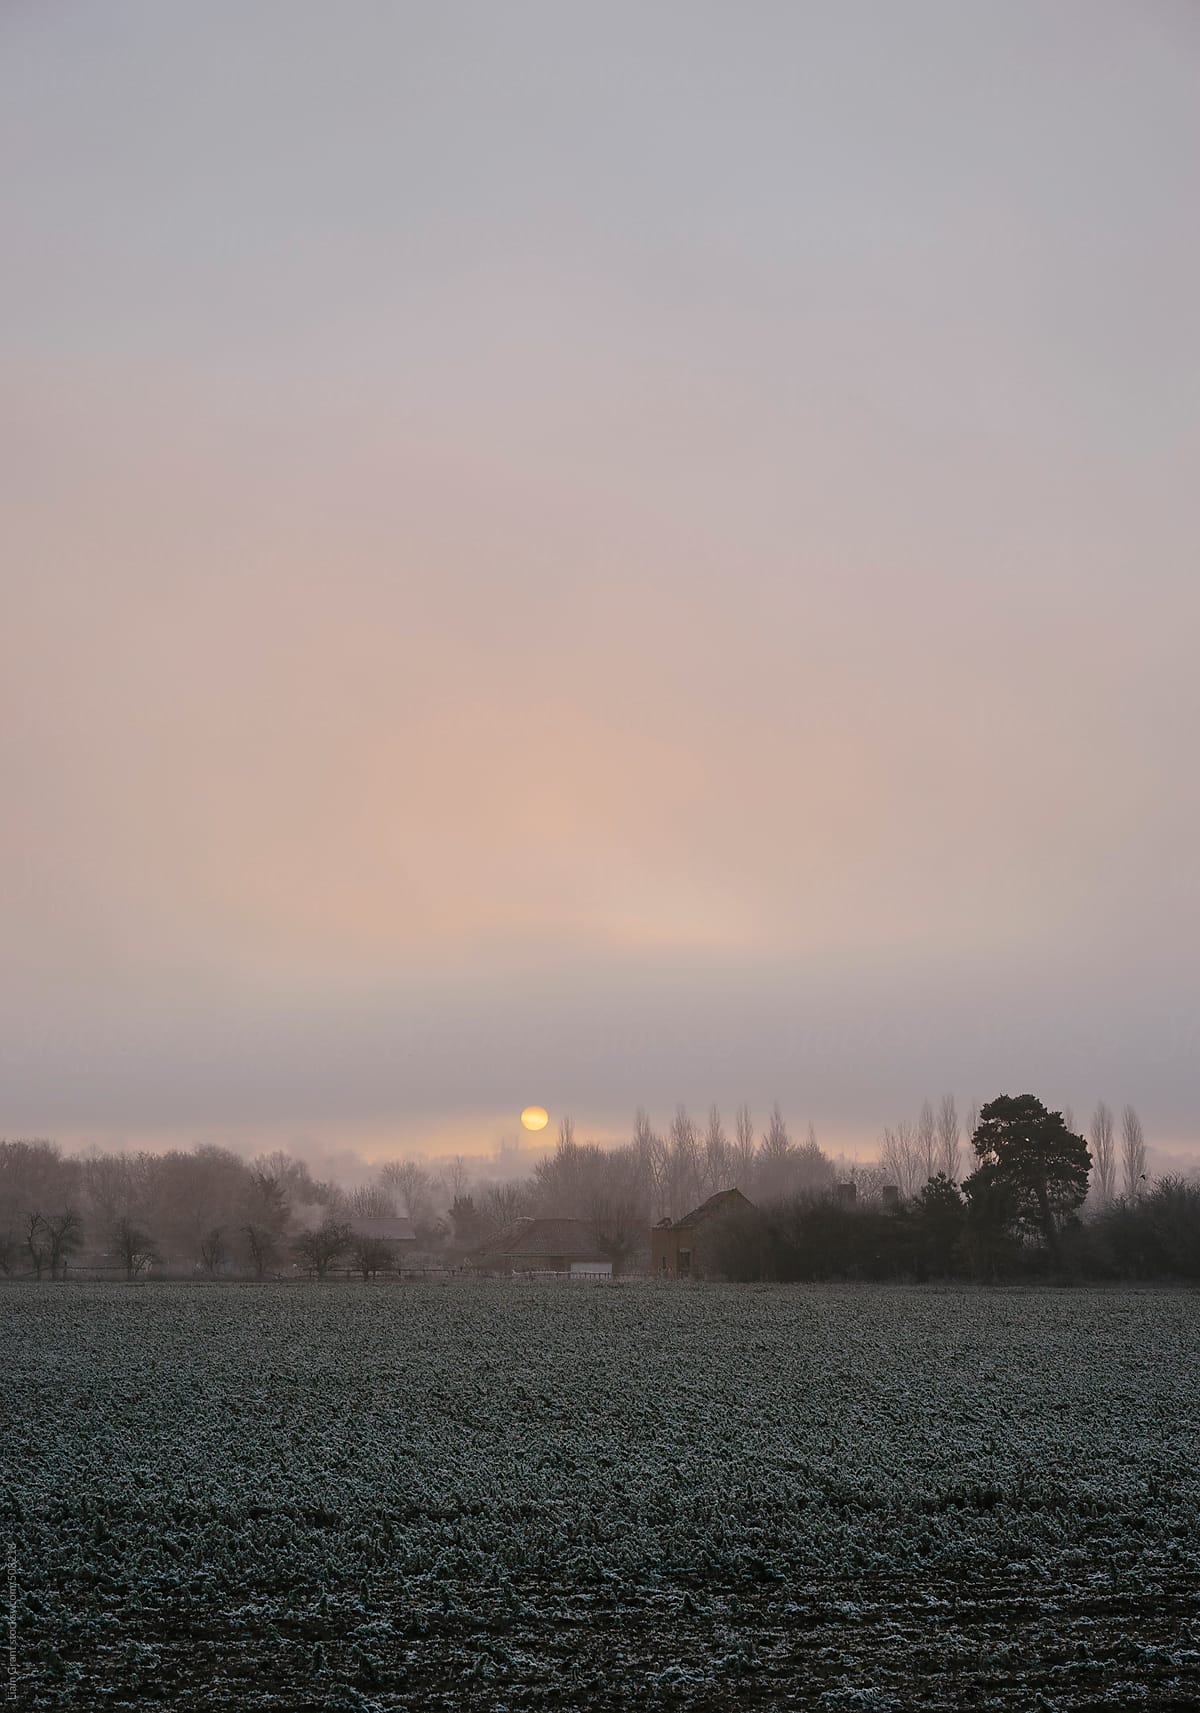 Foggy sunrise over a frosty rural scene.